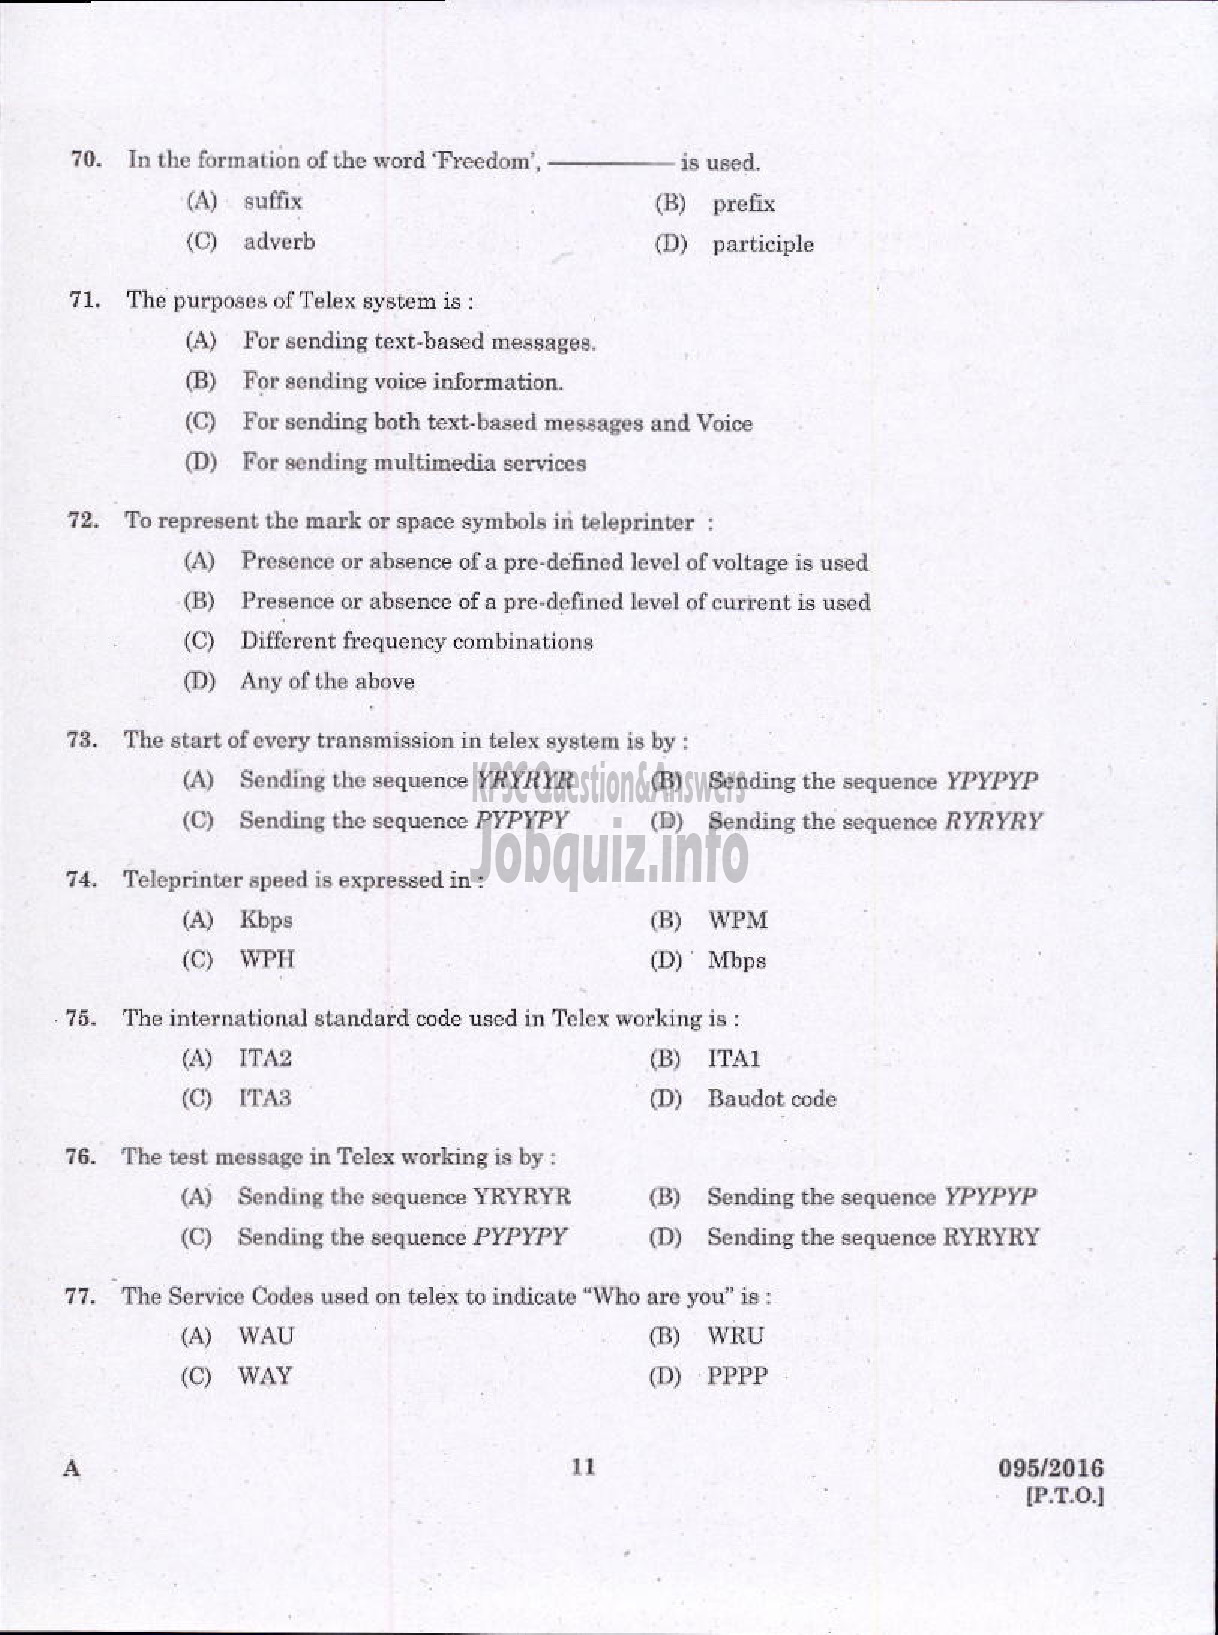 Kerala PSC Question Paper - TELEPHONE OPERATOR DCB-9